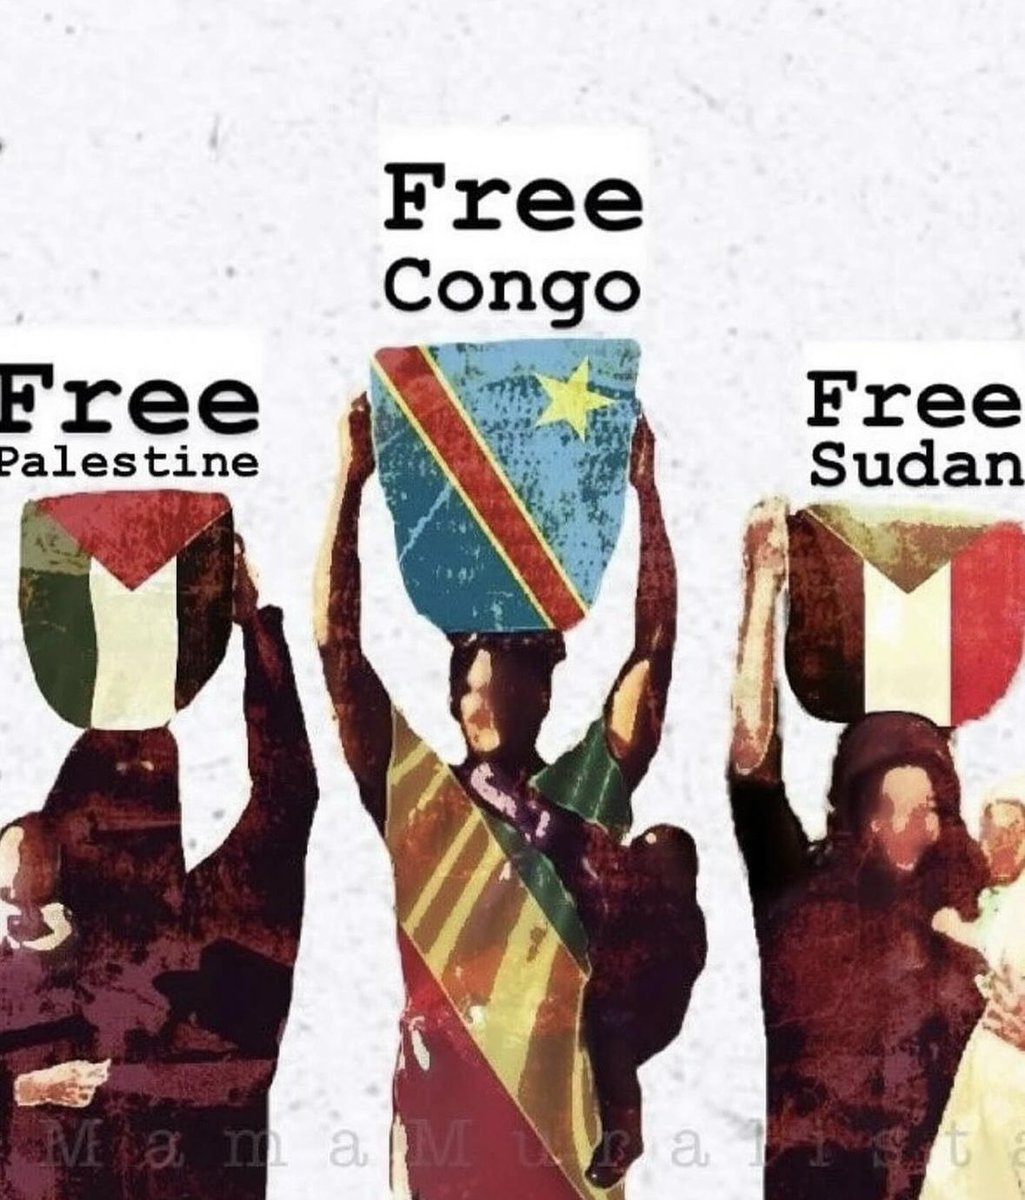 FREE PALESTINE.

FREE CONGO.

FREE SOUDAN.

FREE YÉMEN.

FREE NIGERIA.

FREE ARMÉNIE.

FREE OUÏGHOURS.

FREE HAÏTI.

FREE SOMALIE.